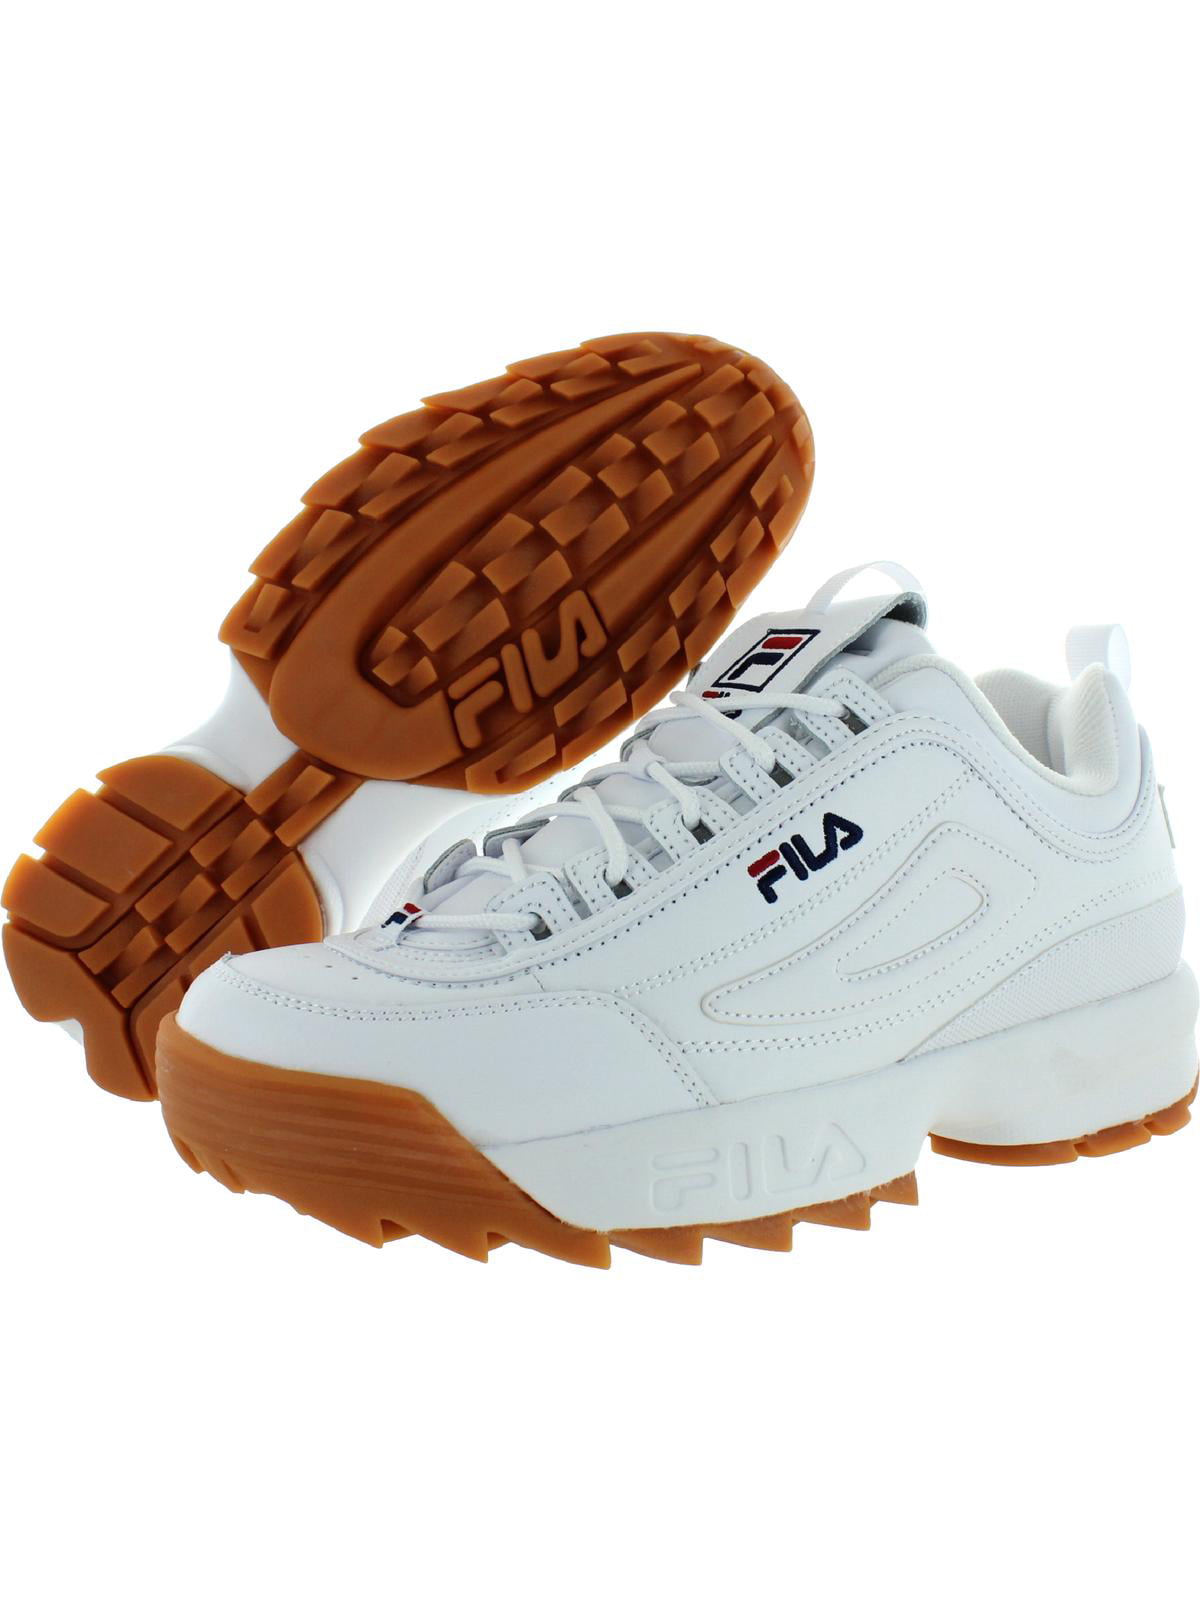 FILA Disruptor II 2 White Authentic Shoes Unisex Size US 4-11  FS1HTA1071X_WWT